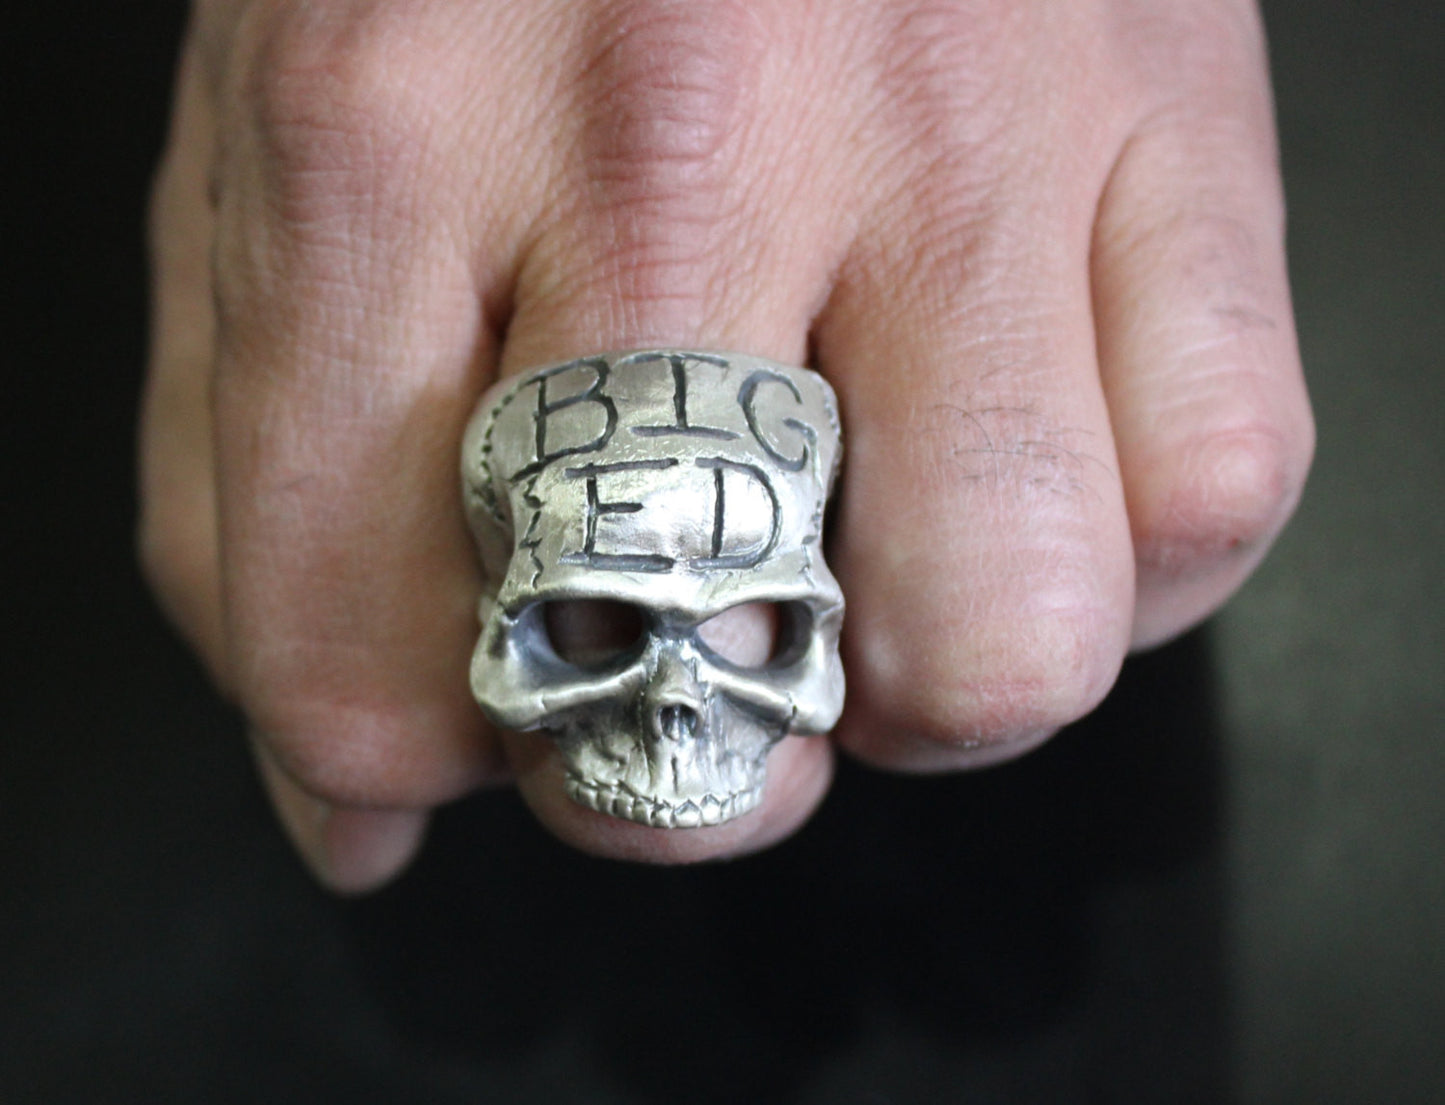 Until Death, Inc. "Big Boss Ring" Huge .925 Sterling Silver Biker Skull Ring.